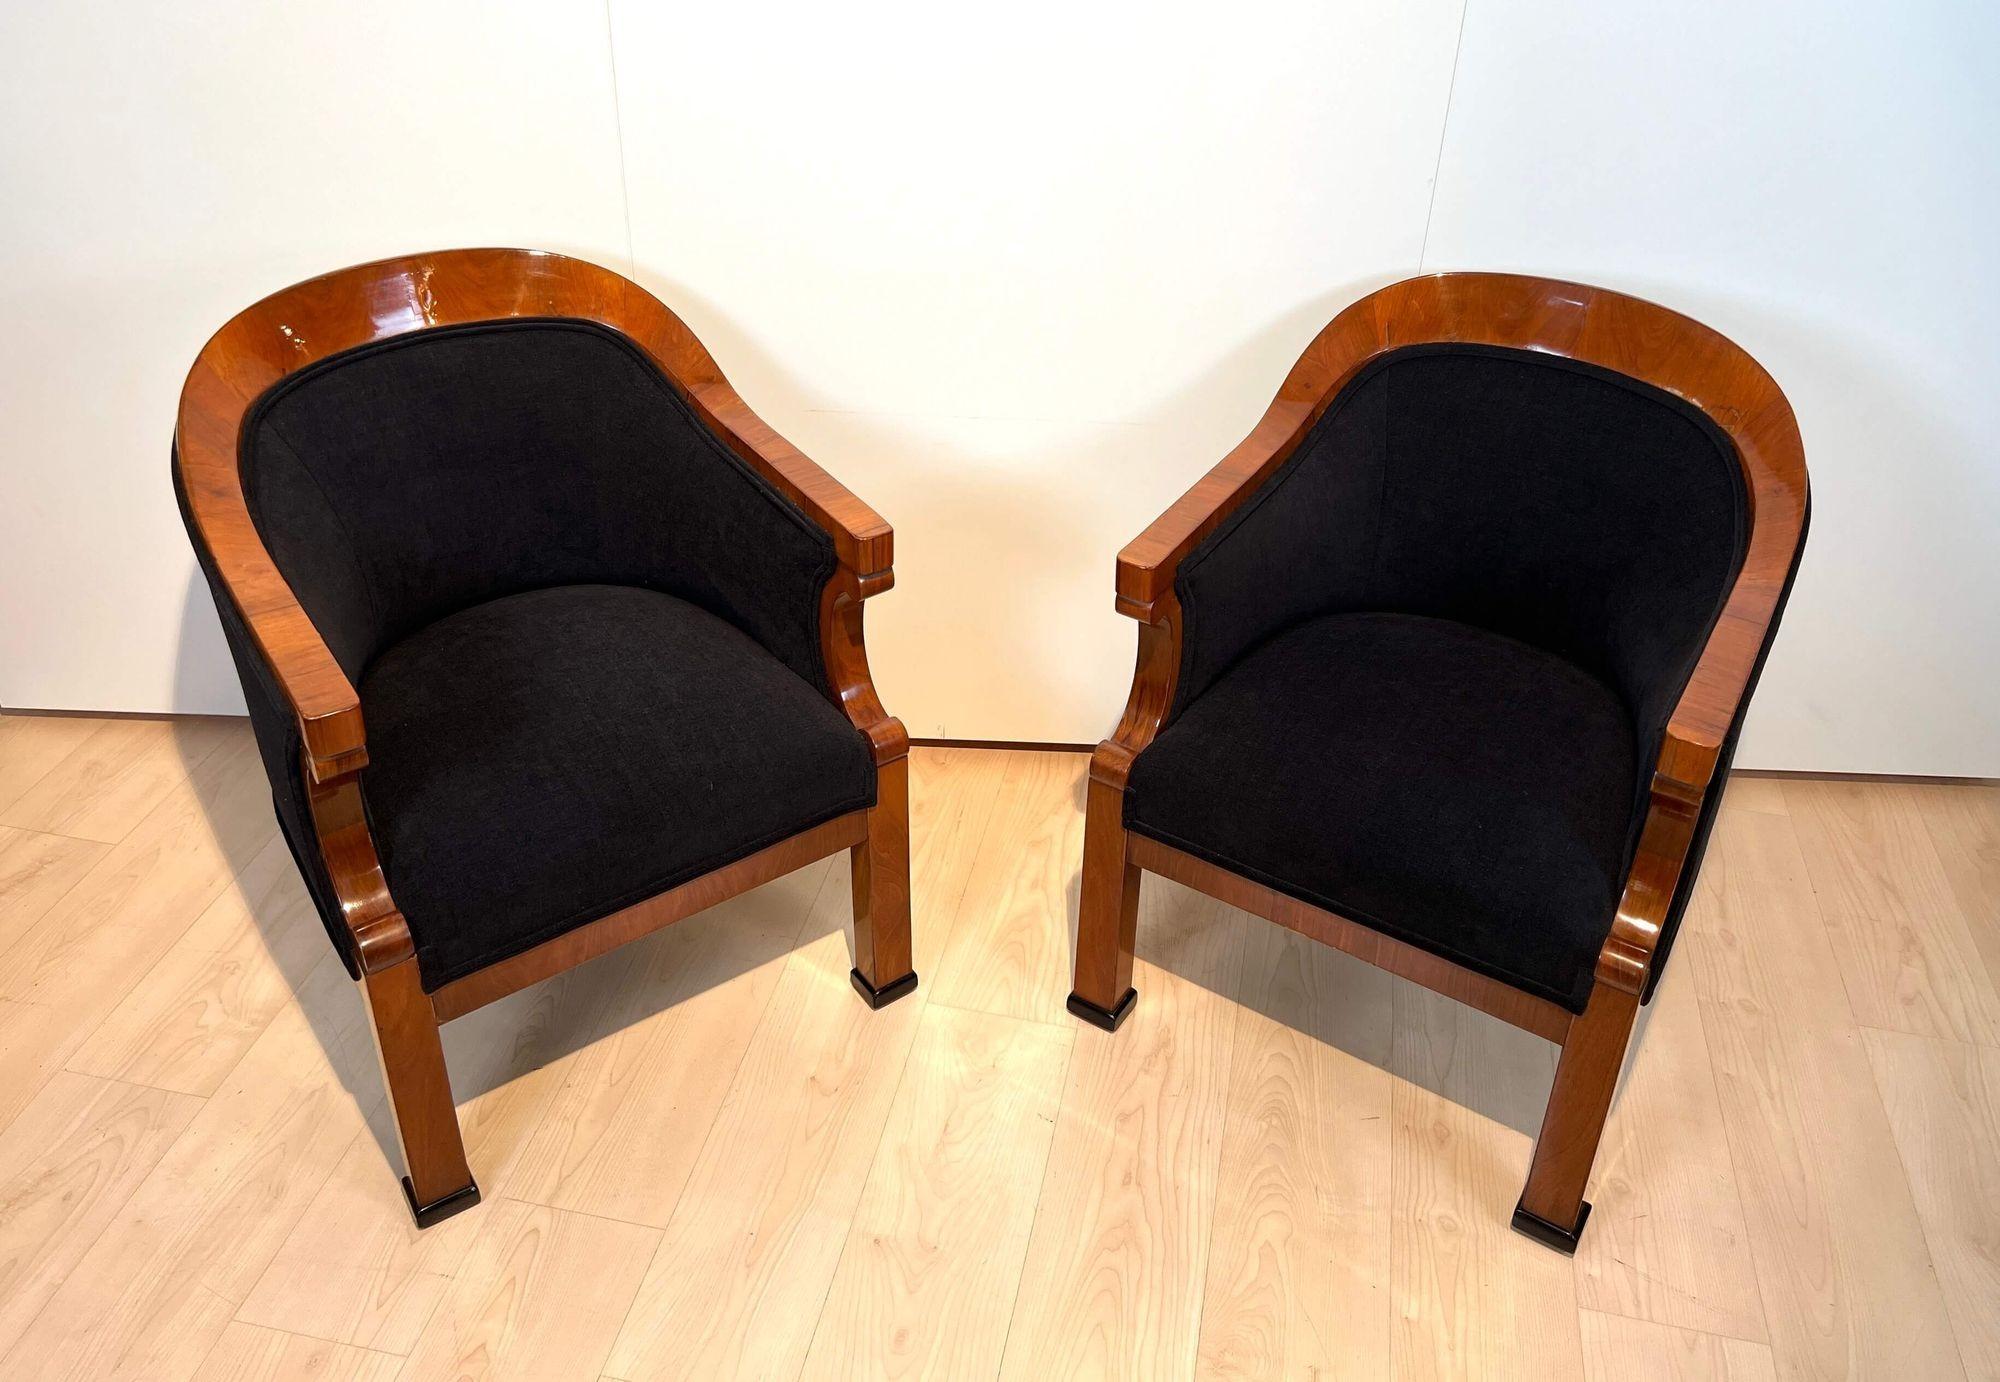 Polished Pair of Biedermeier Bergere Chairs, Walnut Veneer, Vienna/Austria, 19th Century